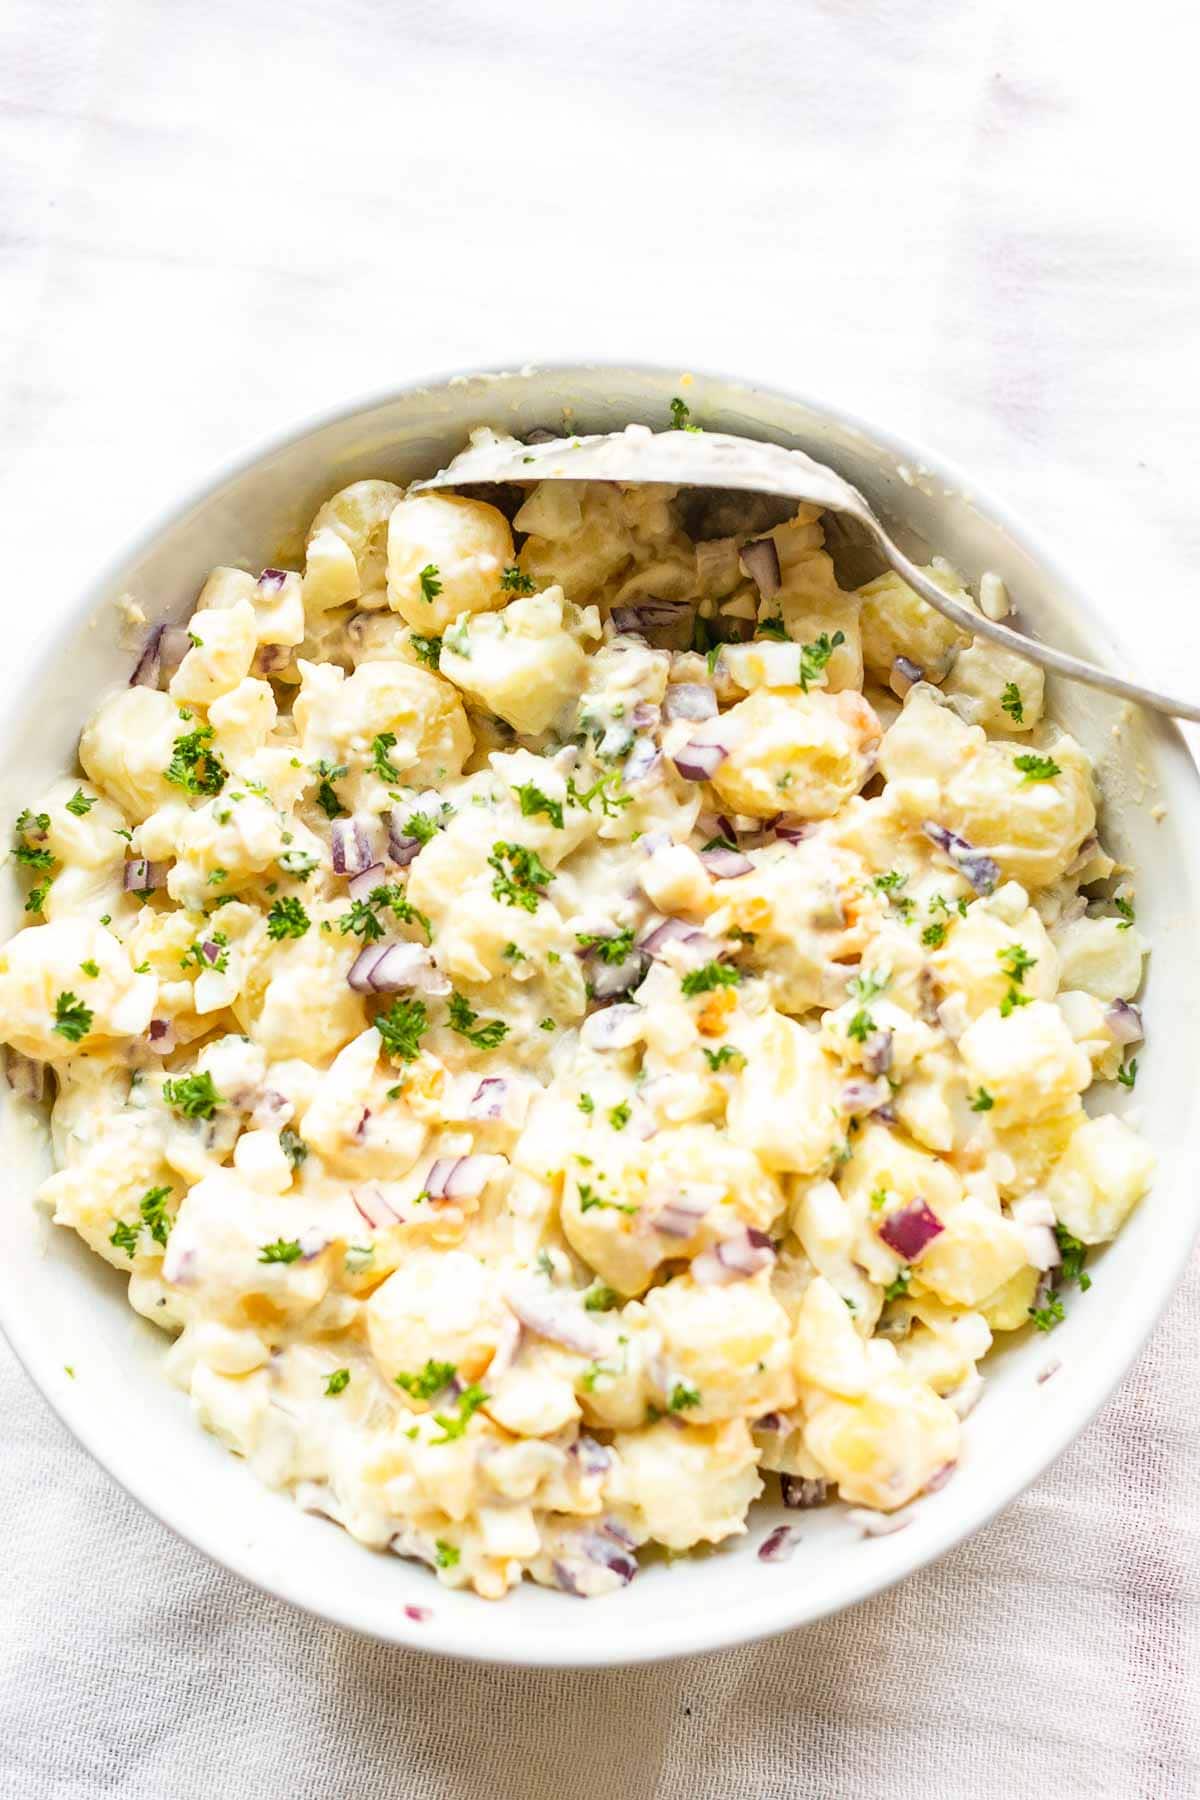 How To Make Potato Salad